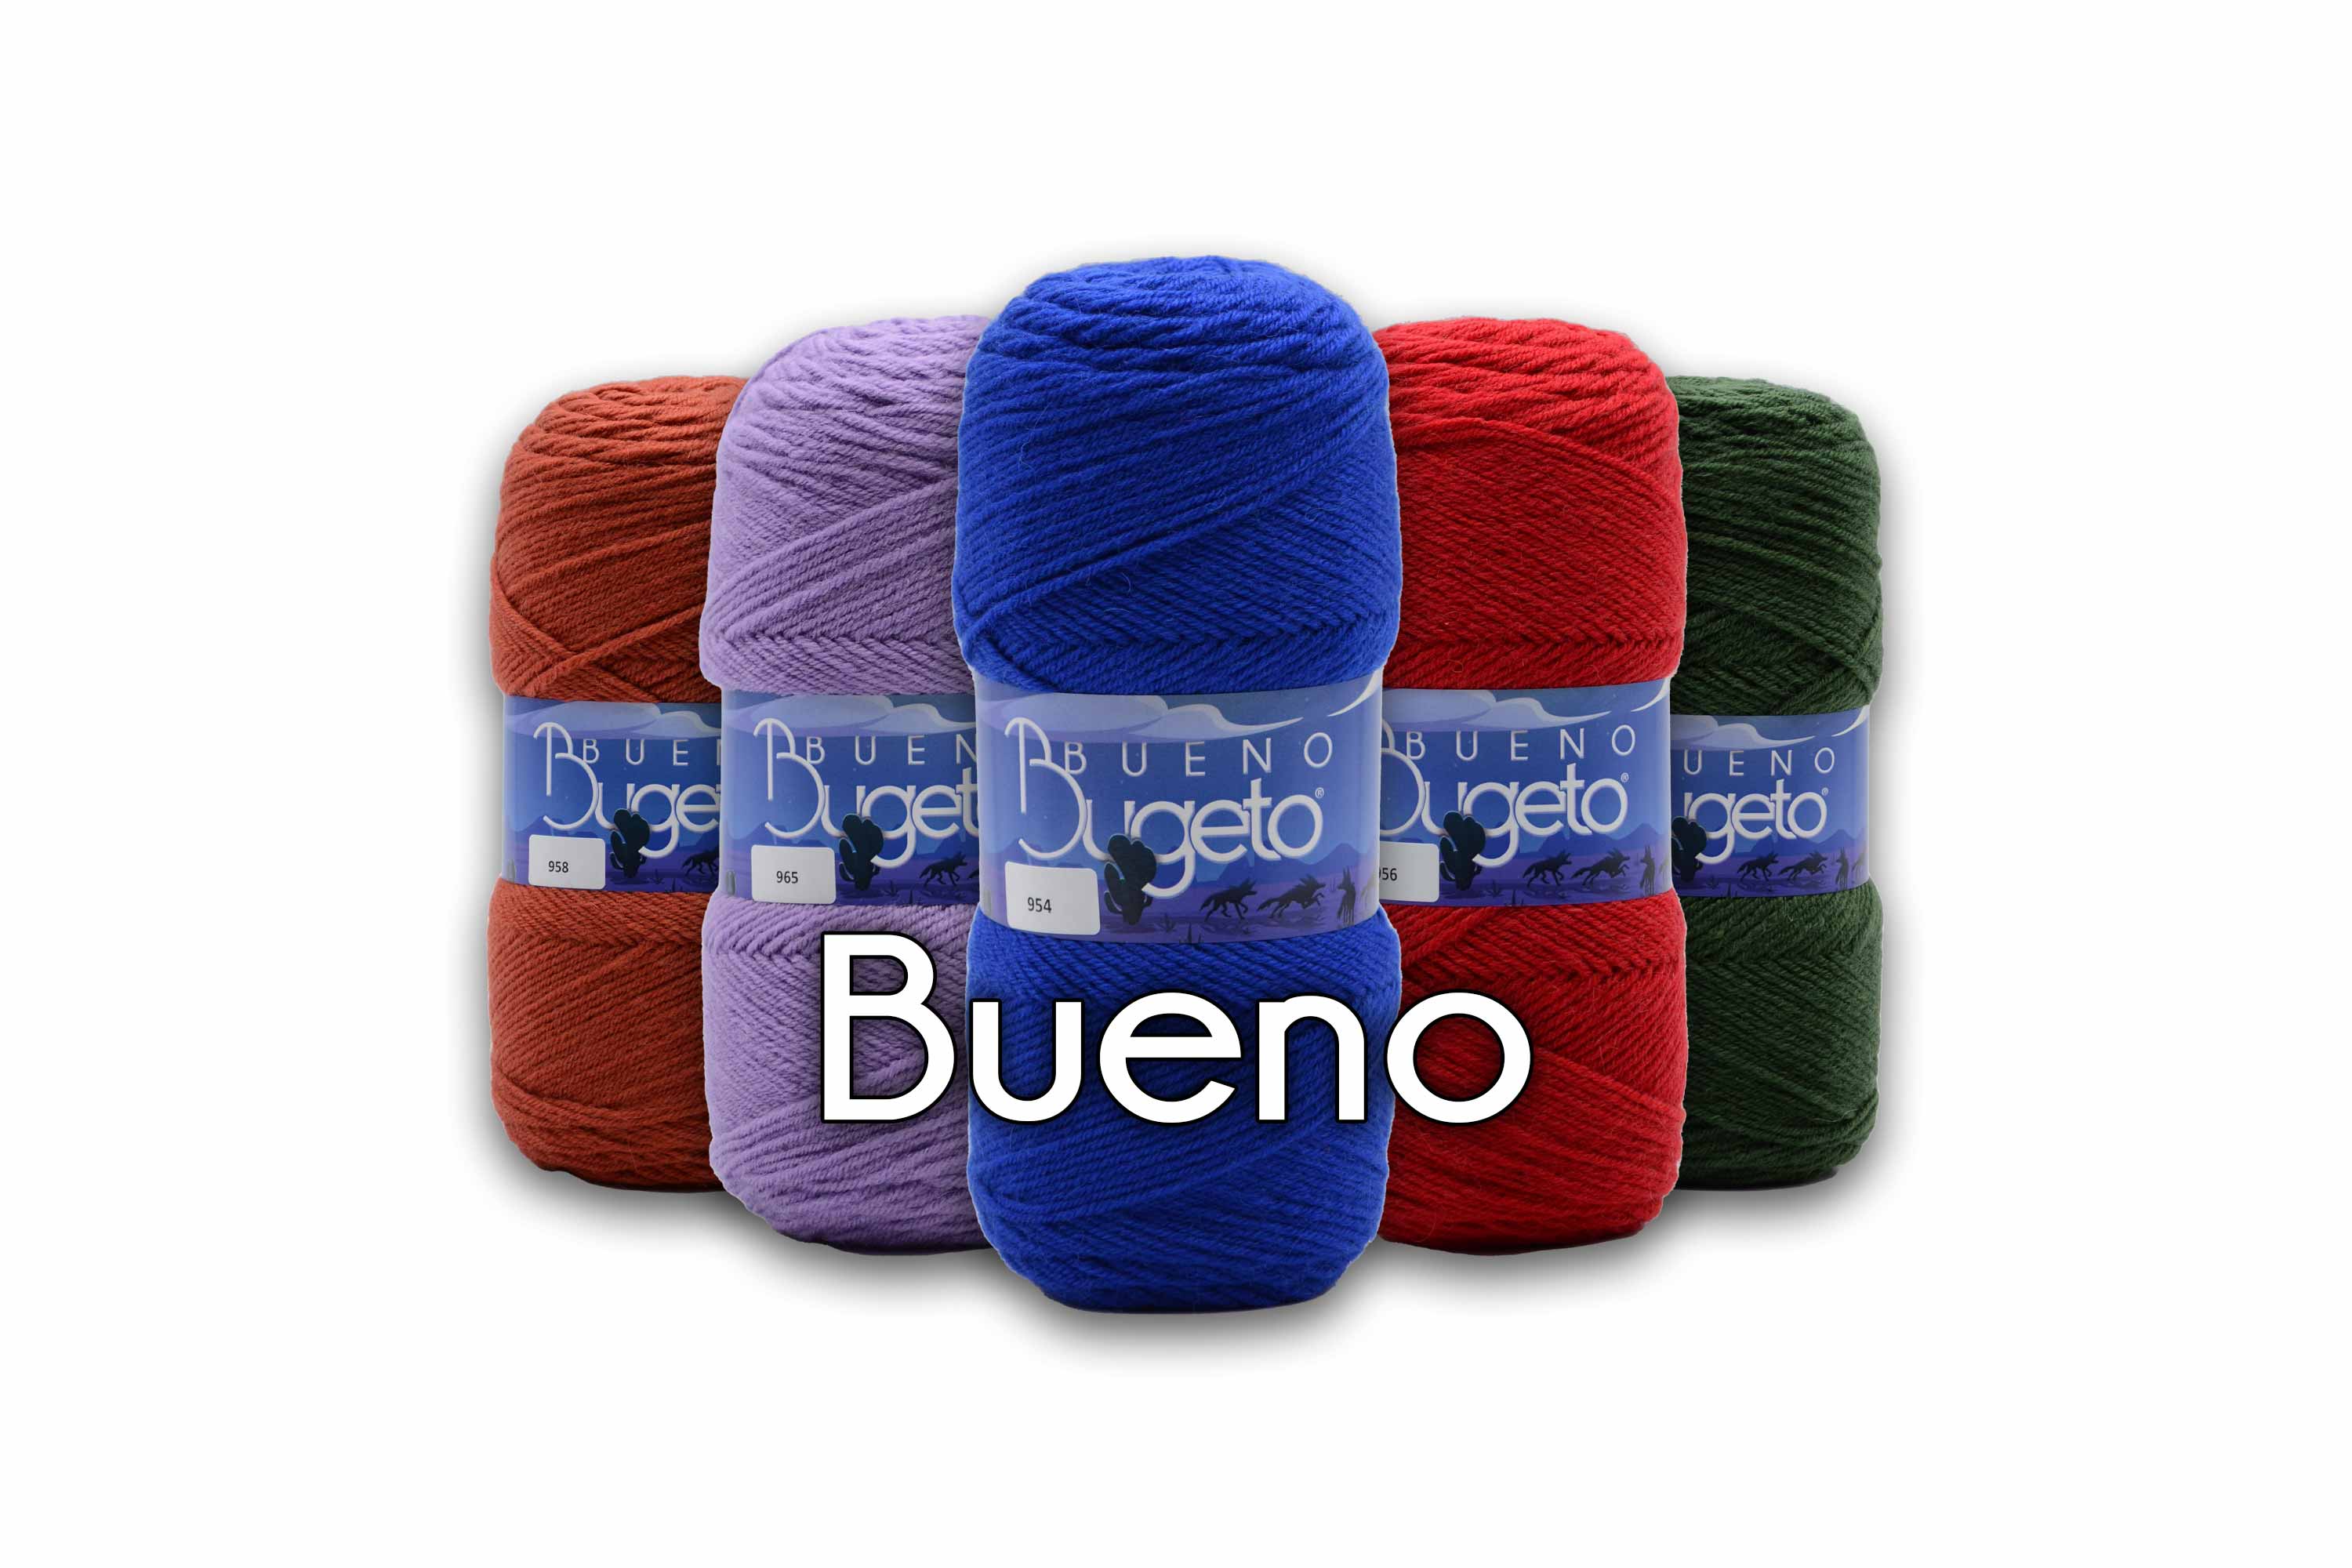 fancy yarn premium acrylic yarn Bugeto yarn winter yarn soft thick yarn acrylic wool yarn jean yarn bugeto